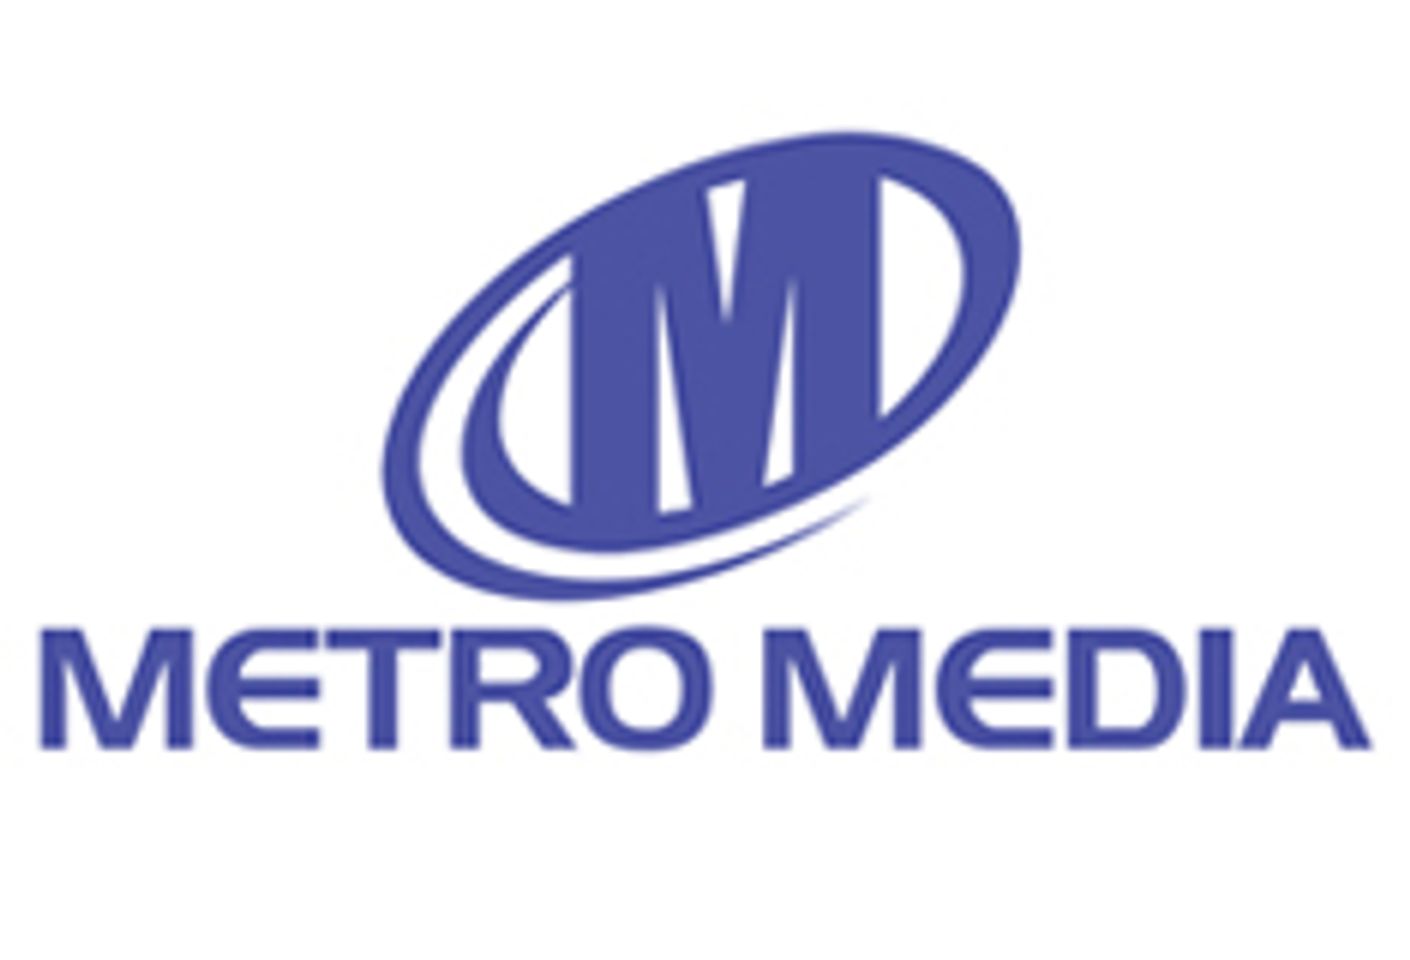 Metro Seeks Salesperson